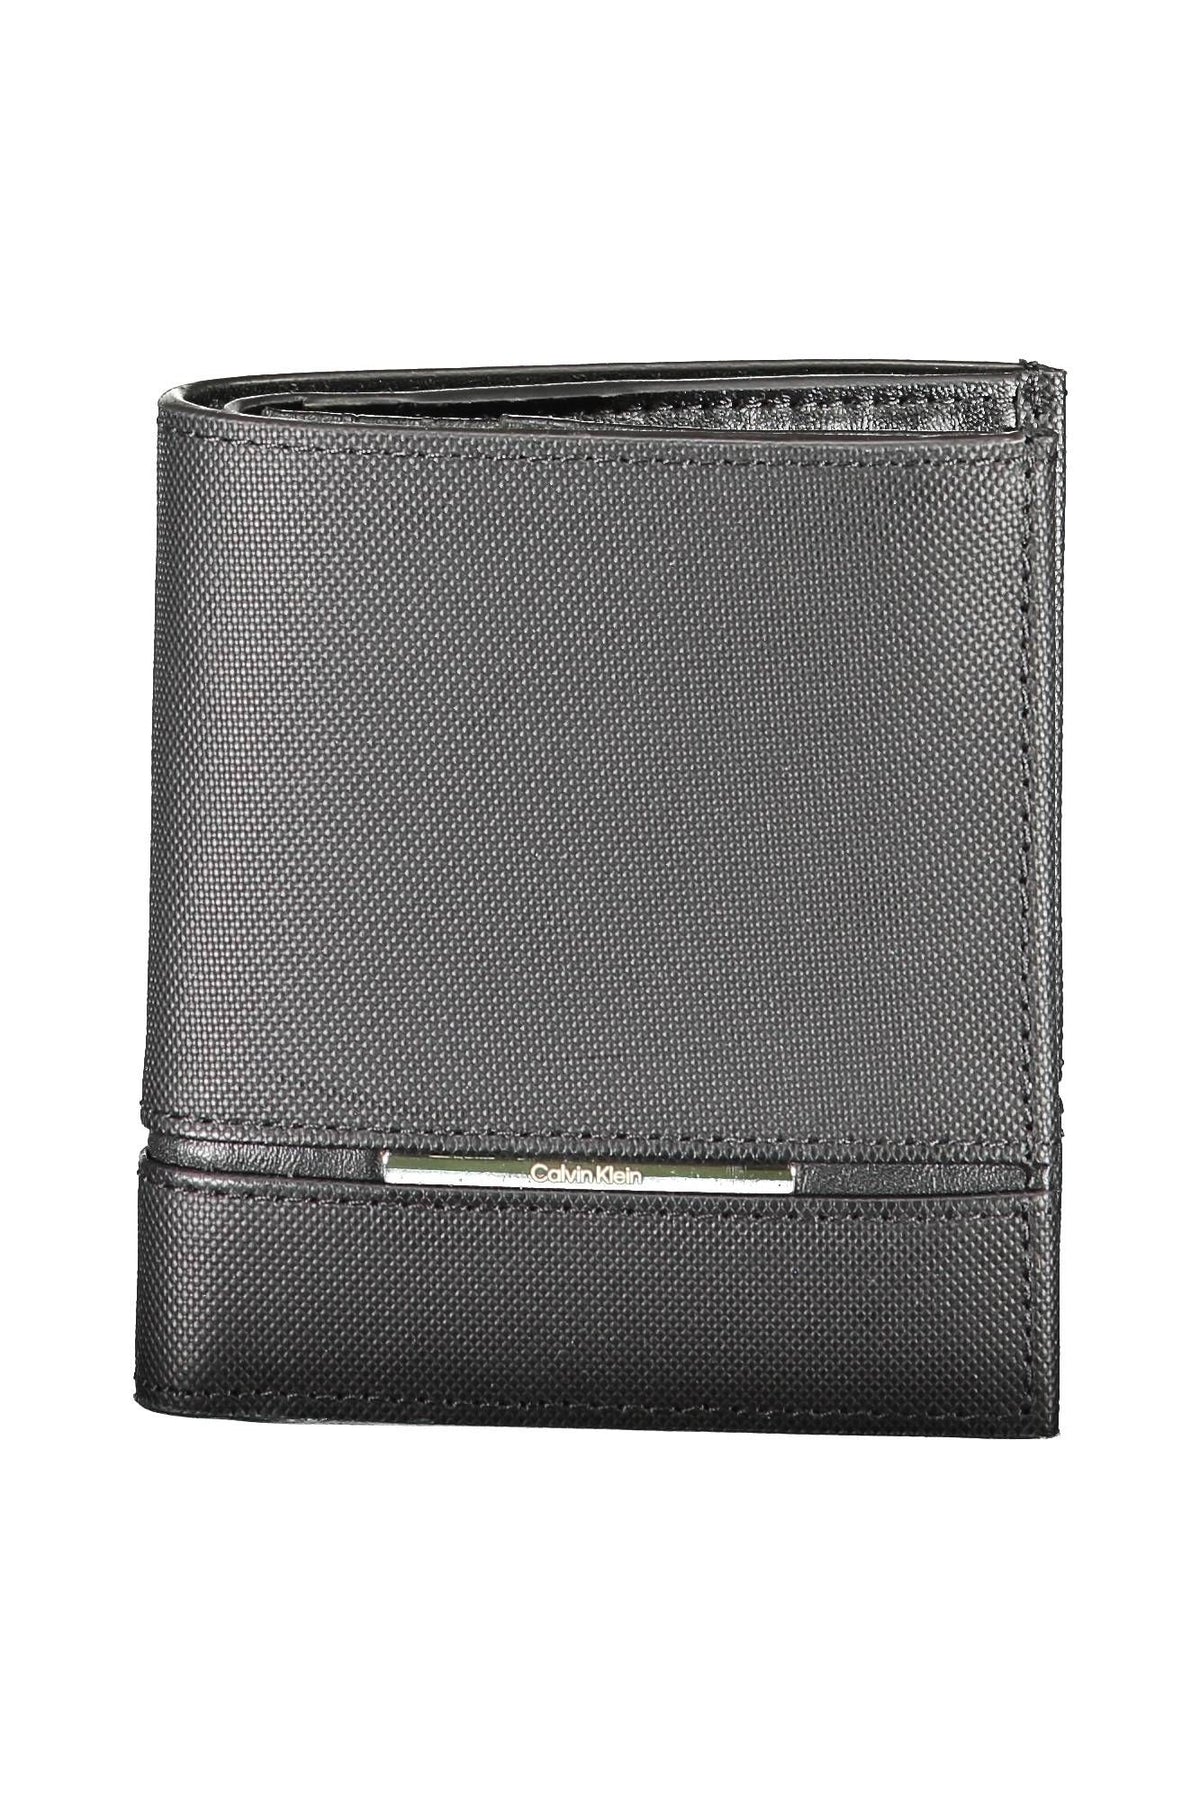 Calvin Klein Elegant Black Leather Men's Wallet with RFID Block